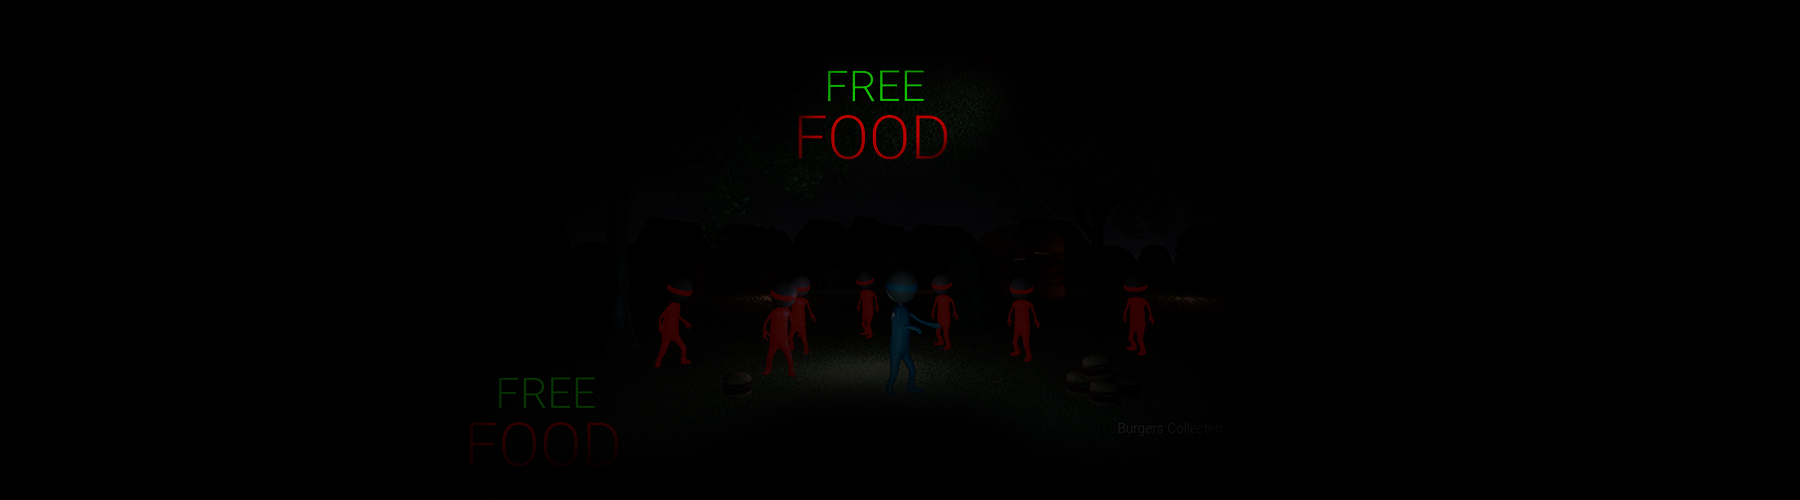 Free Food!